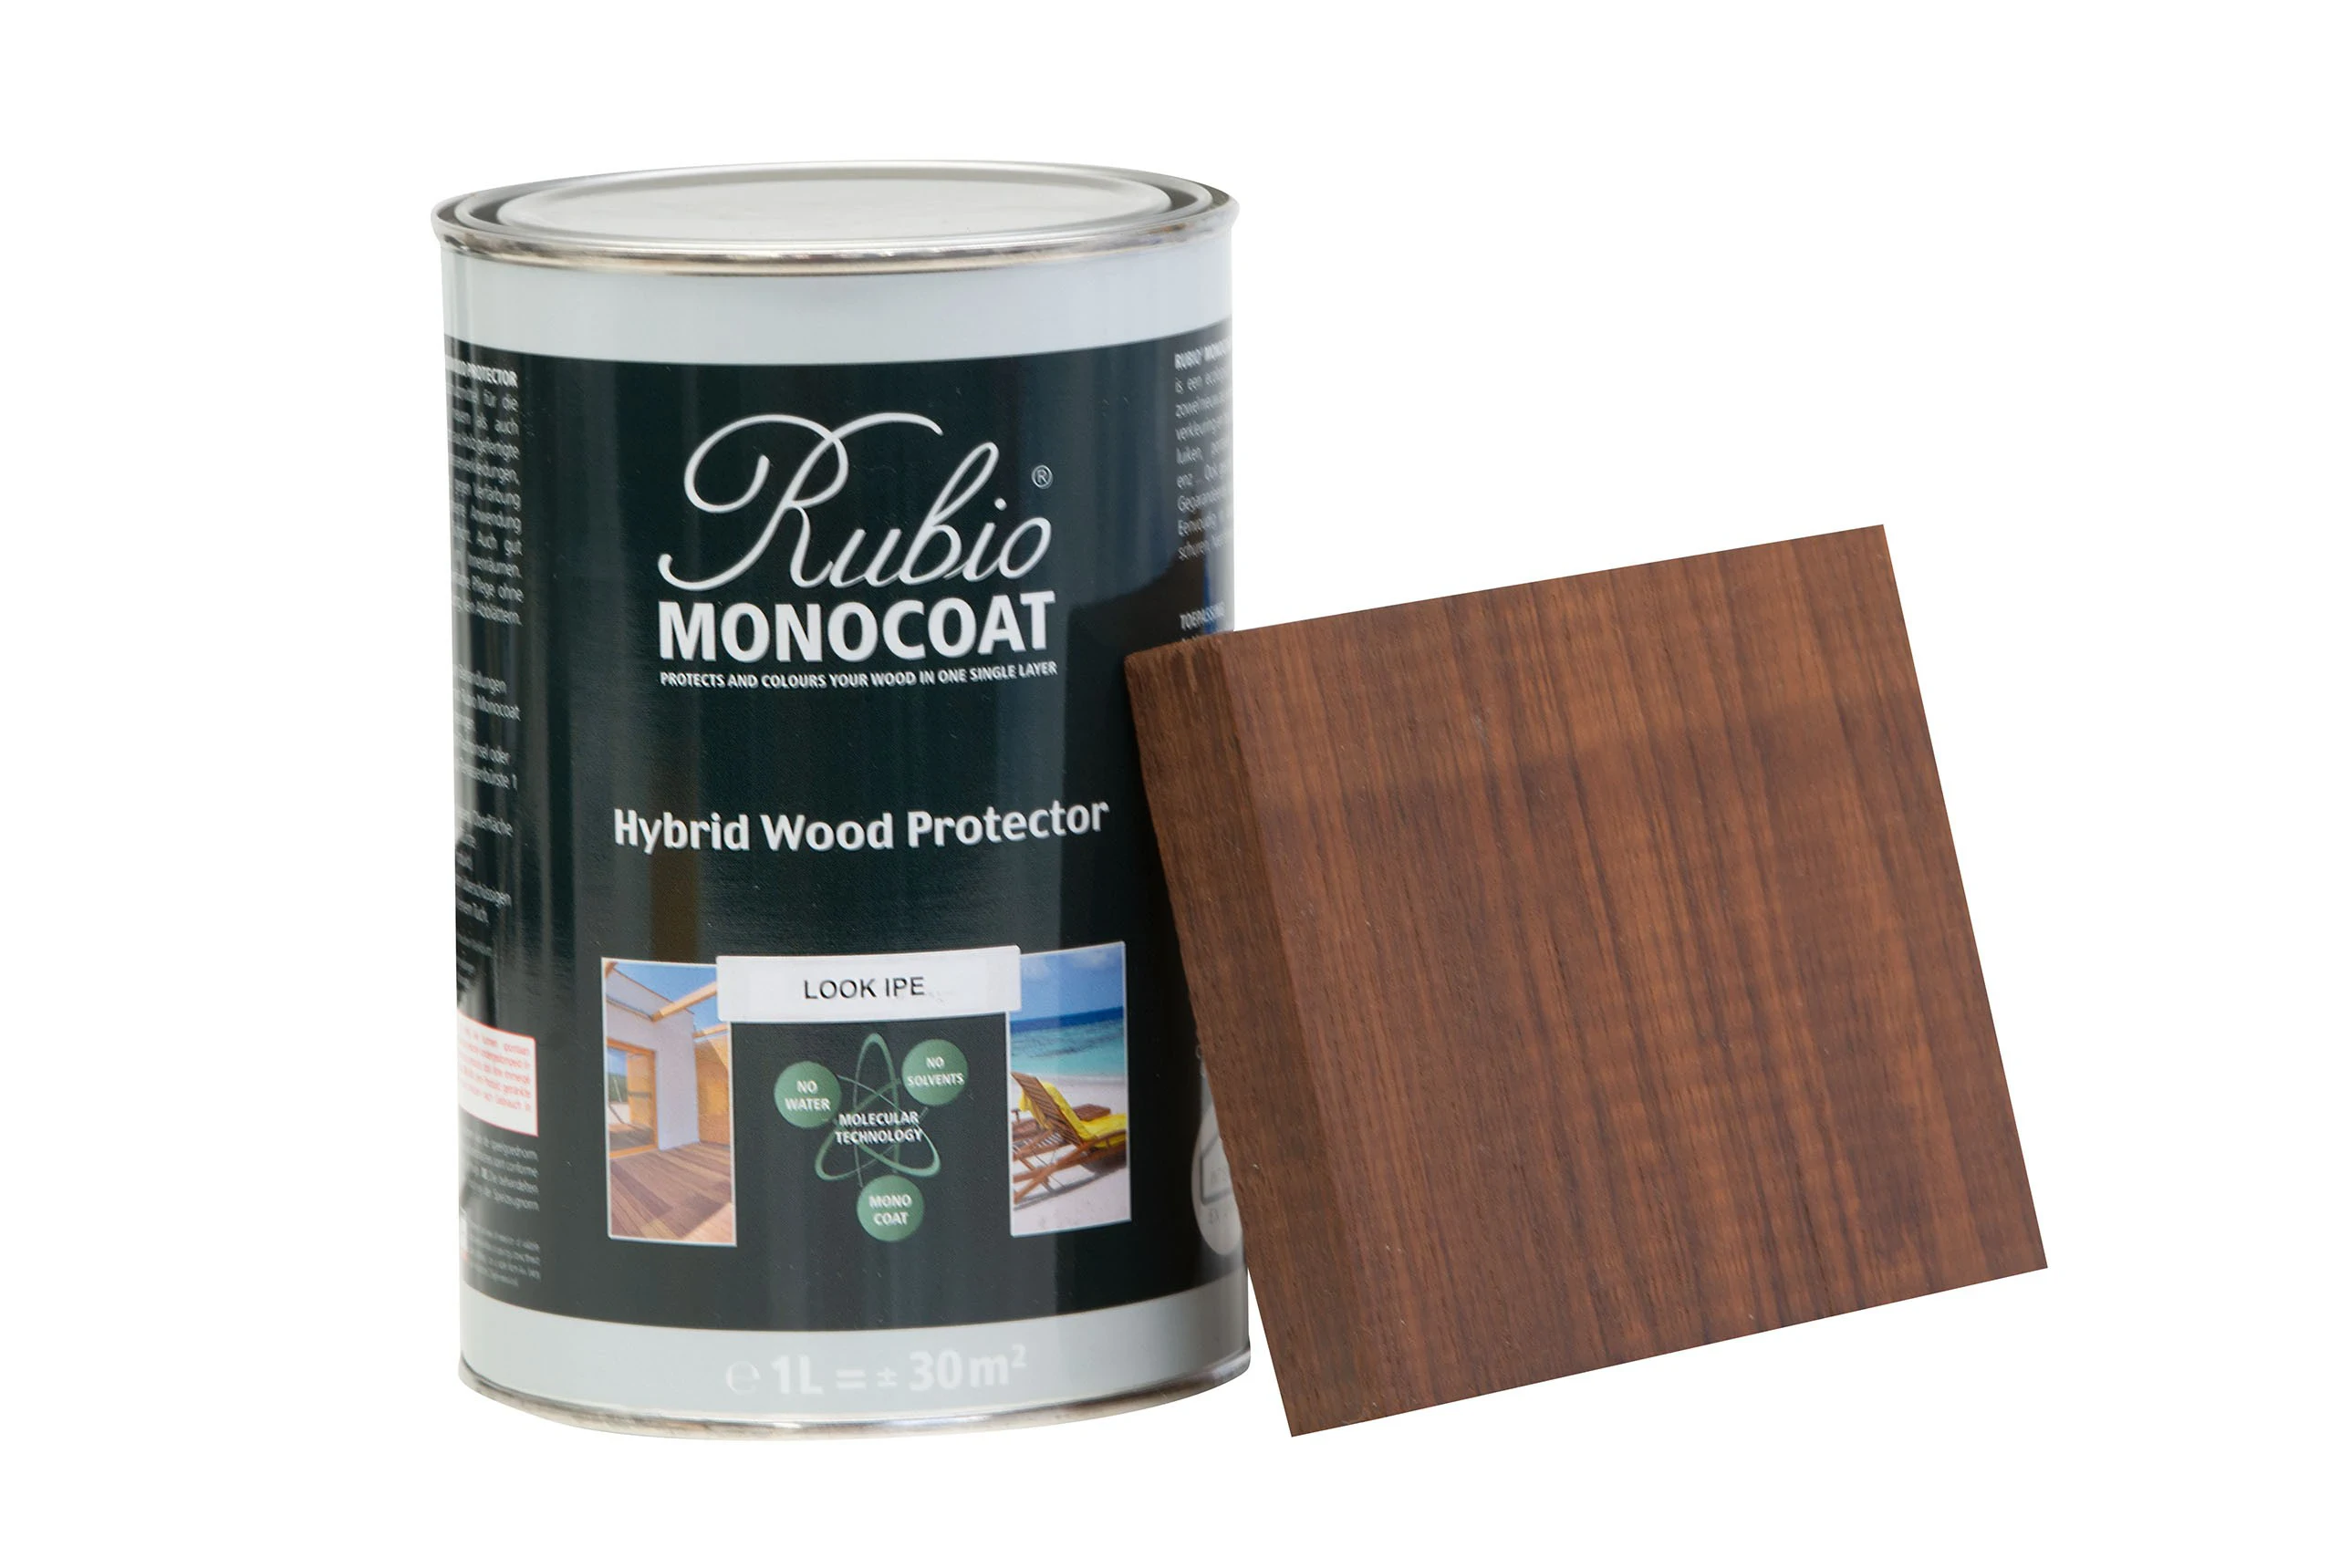 Monocoat hybrid wood protector look ipé 1 liter